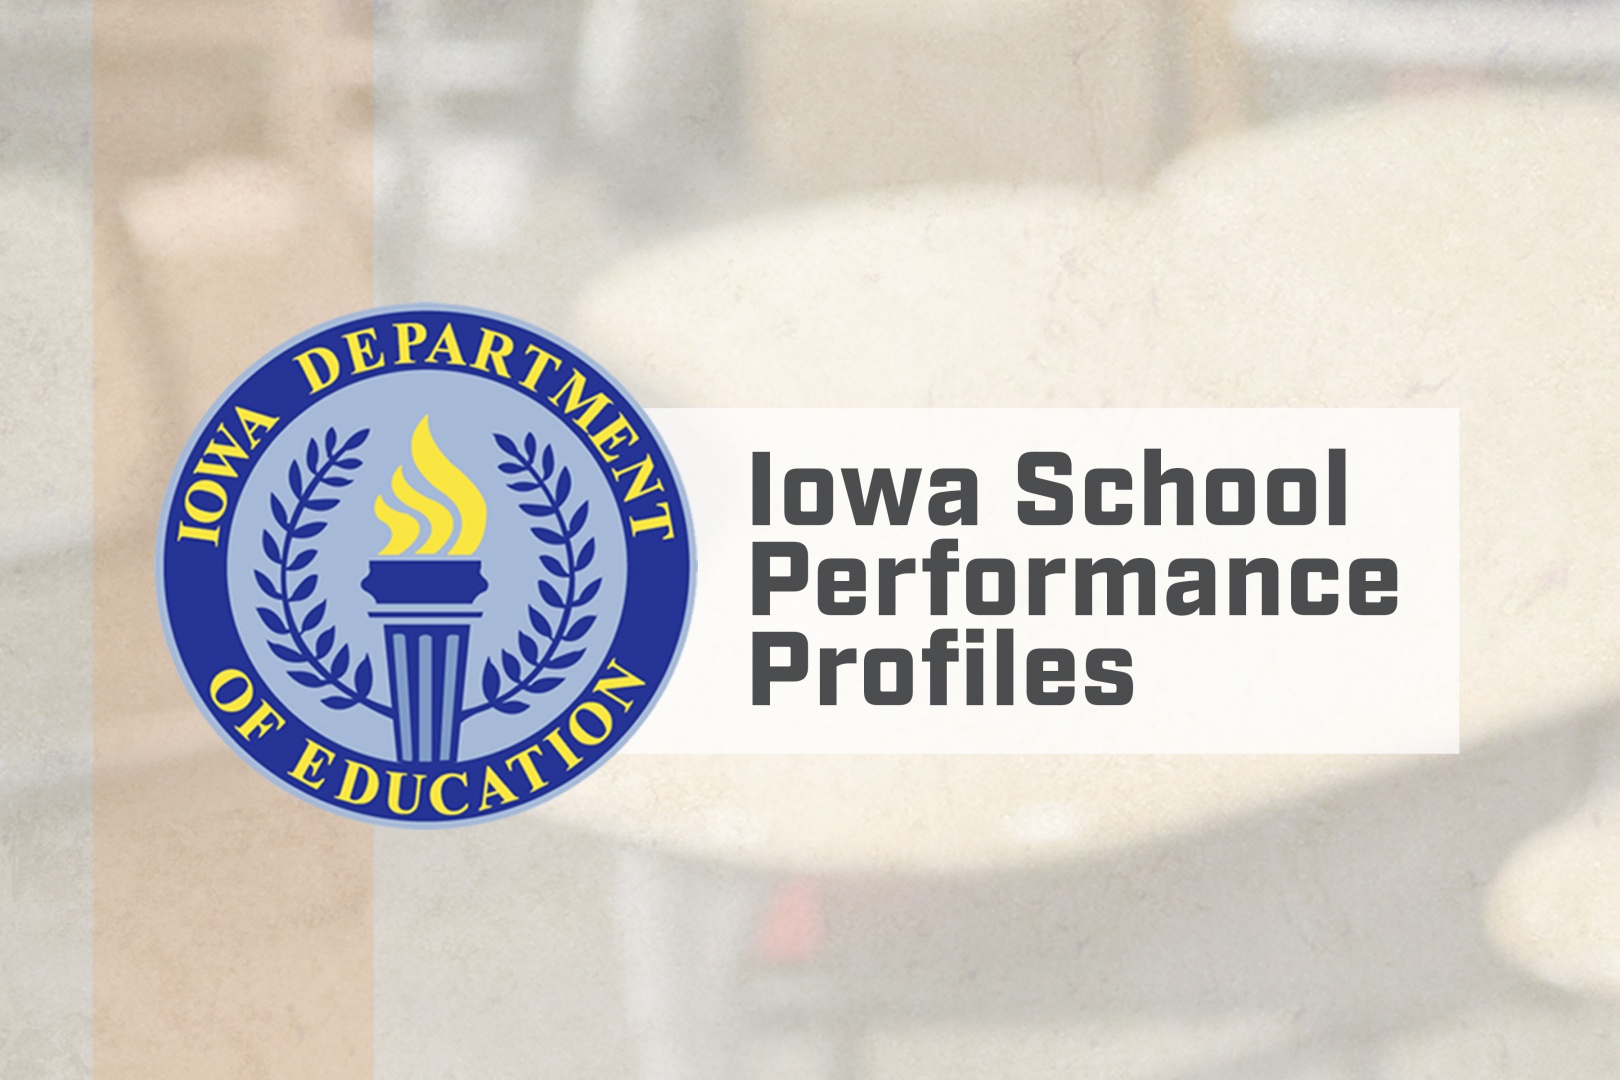 Iowa Department of Education releases Iowa School Performance Profiles